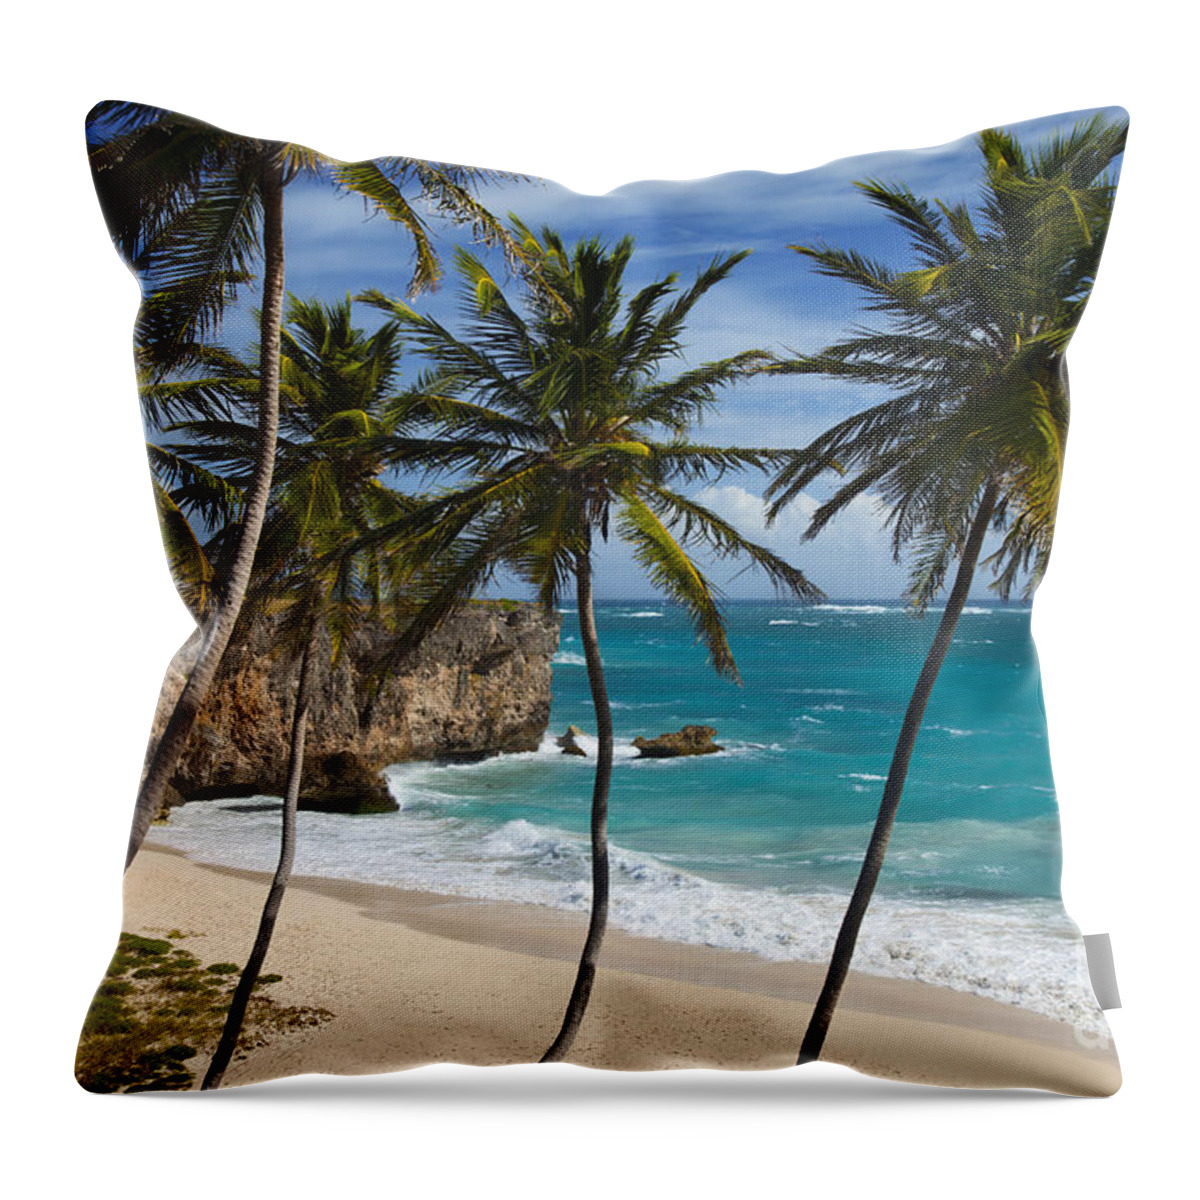 Barbados Throw Pillow featuring the photograph Barbados Beach by Brian Jannsen